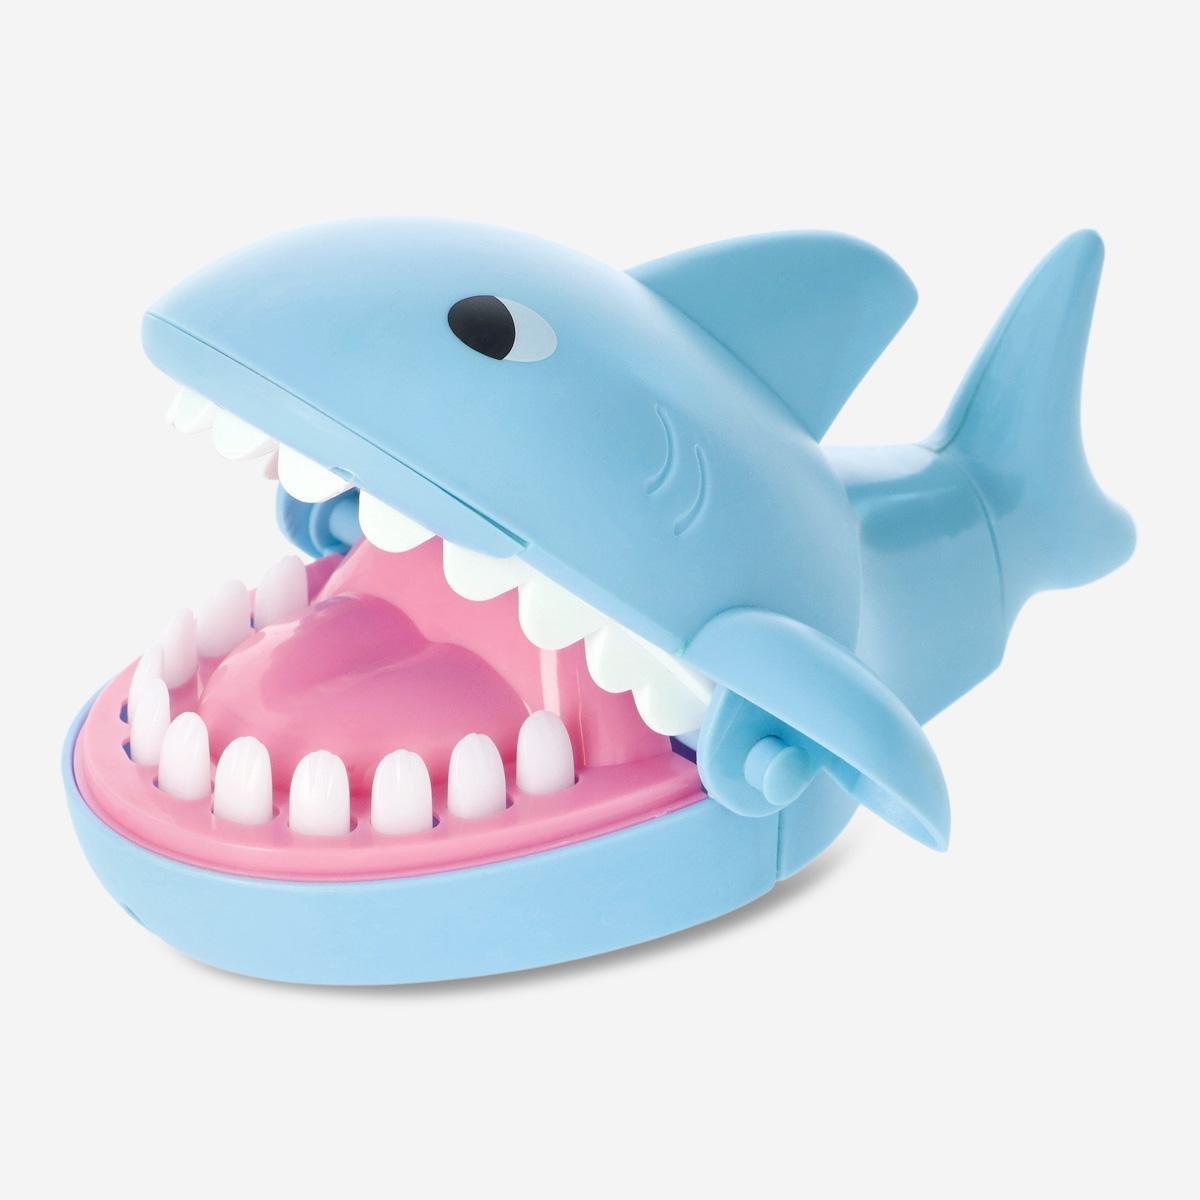 Air Frame Shark Bite Game - Rental-World